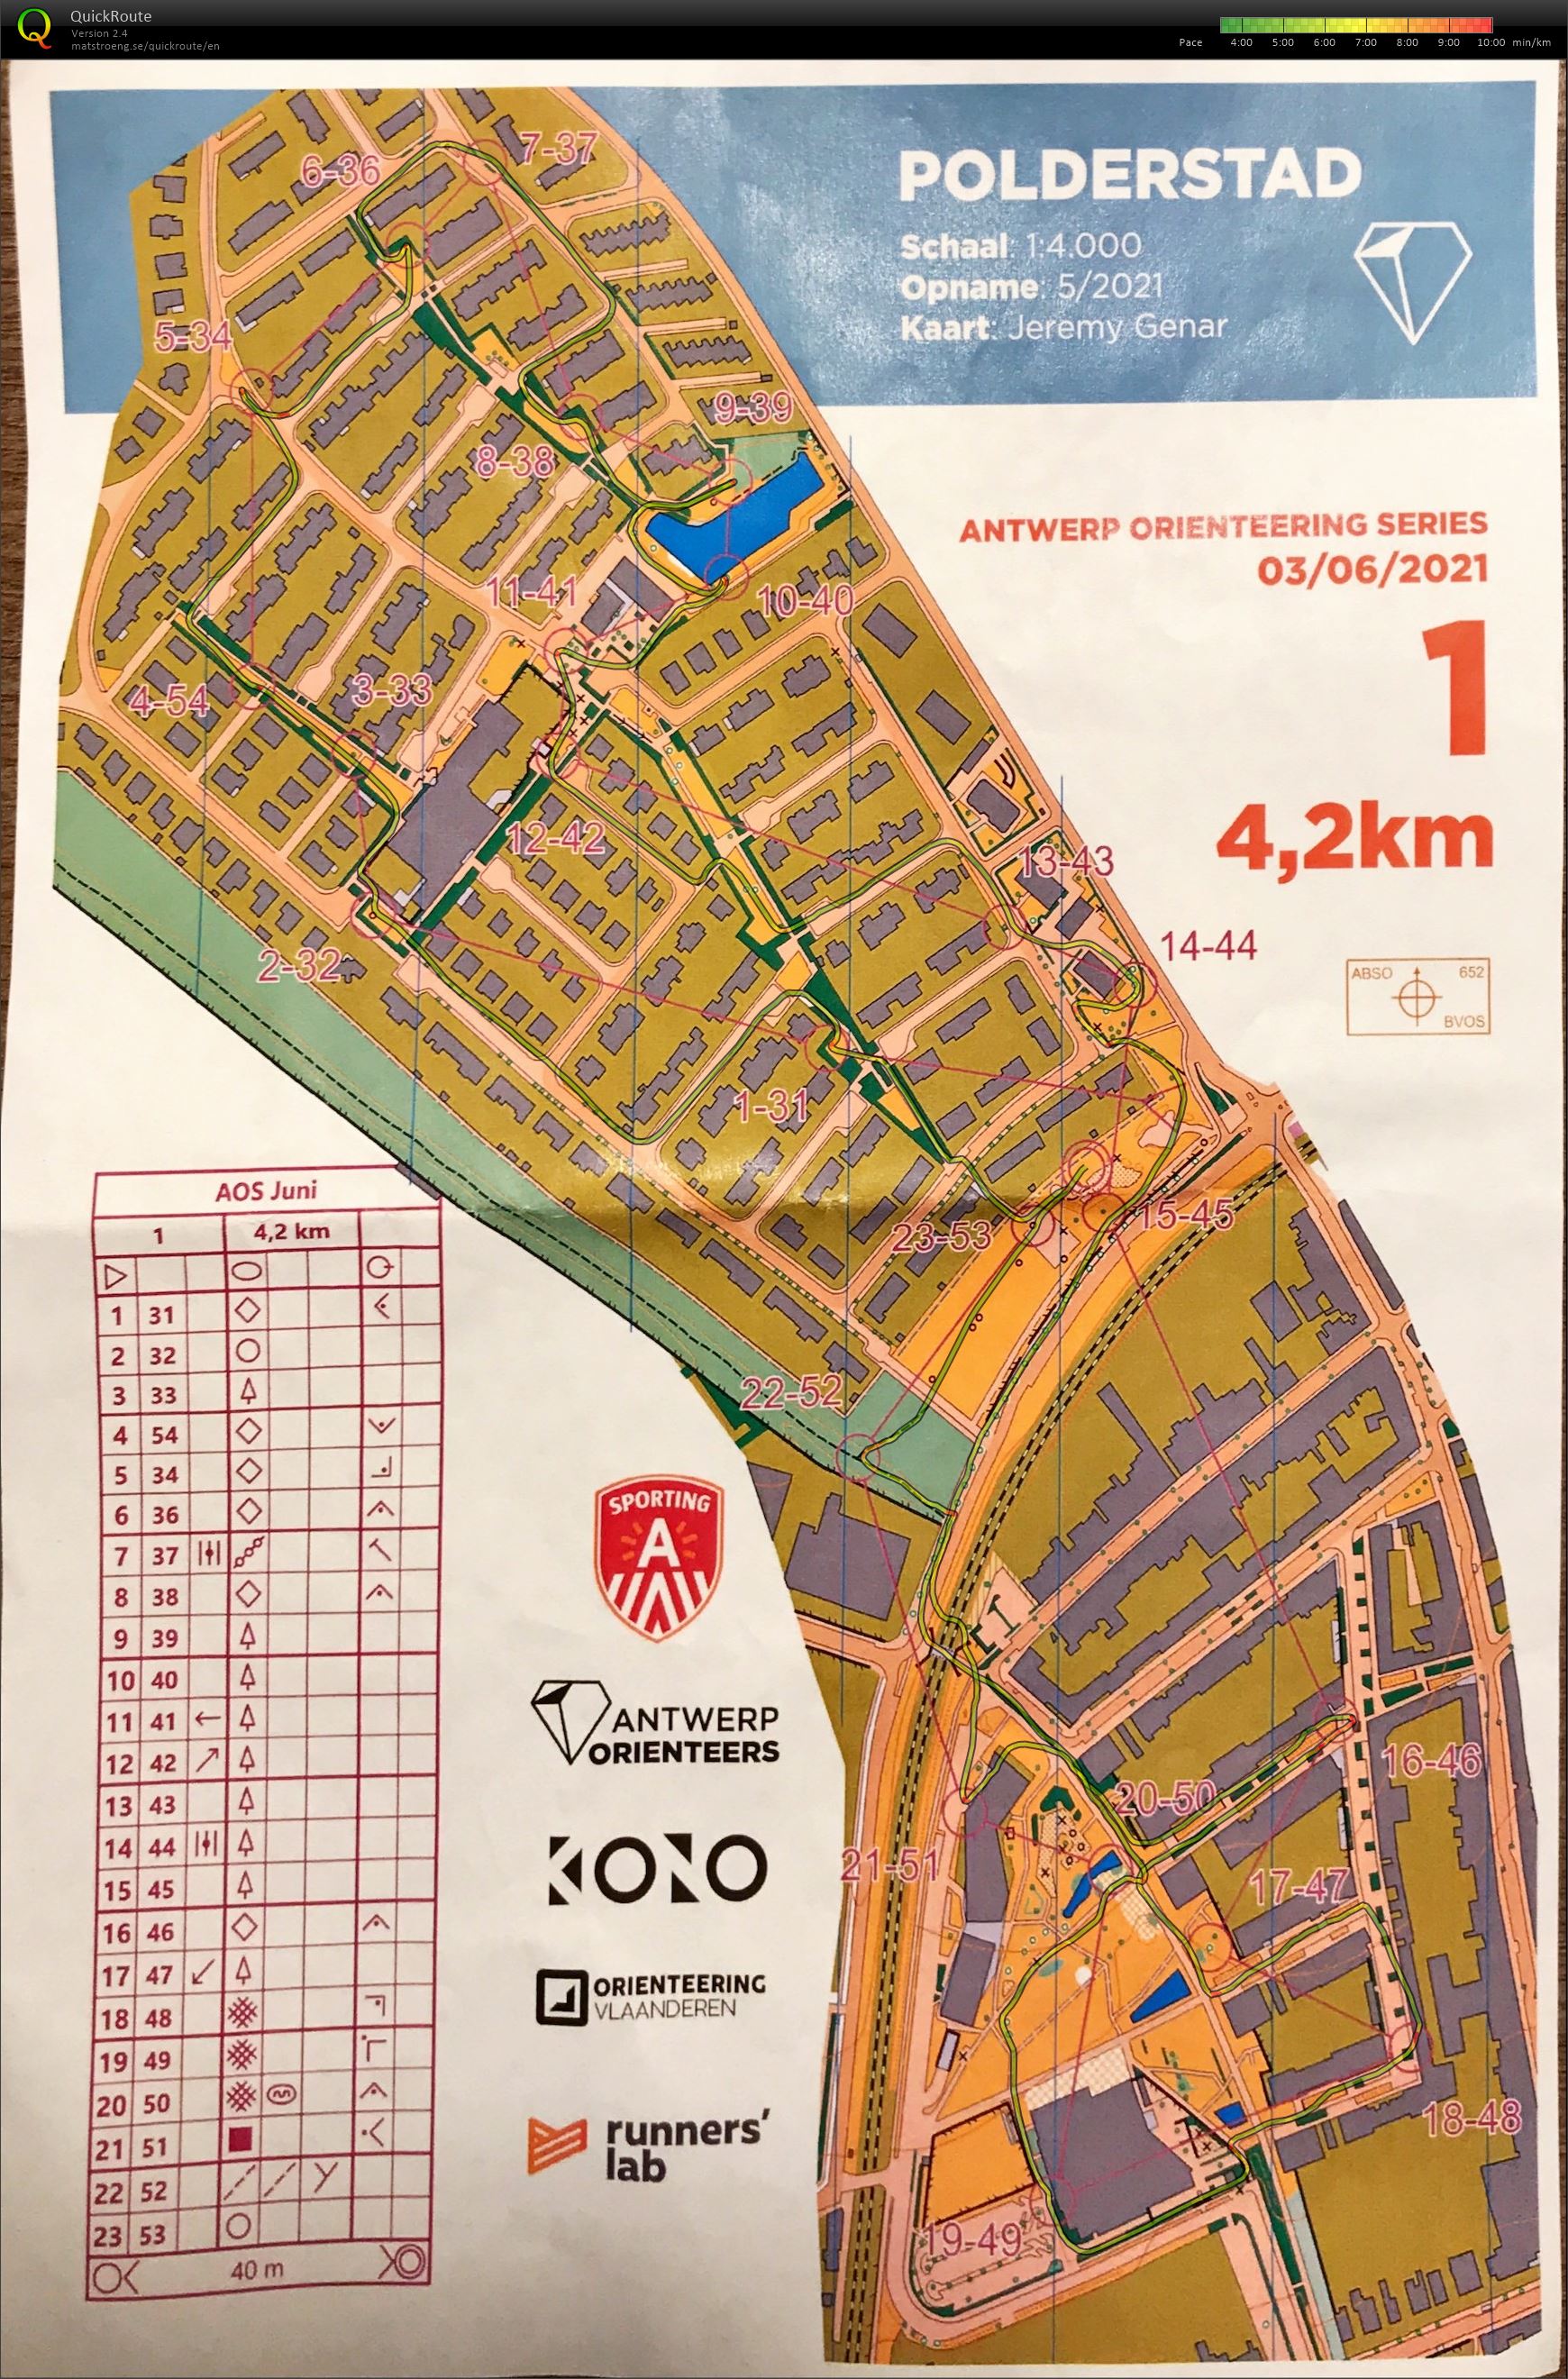 Antwerp Orienteering Series - Polderstad - 4.2K (03/06/2021)